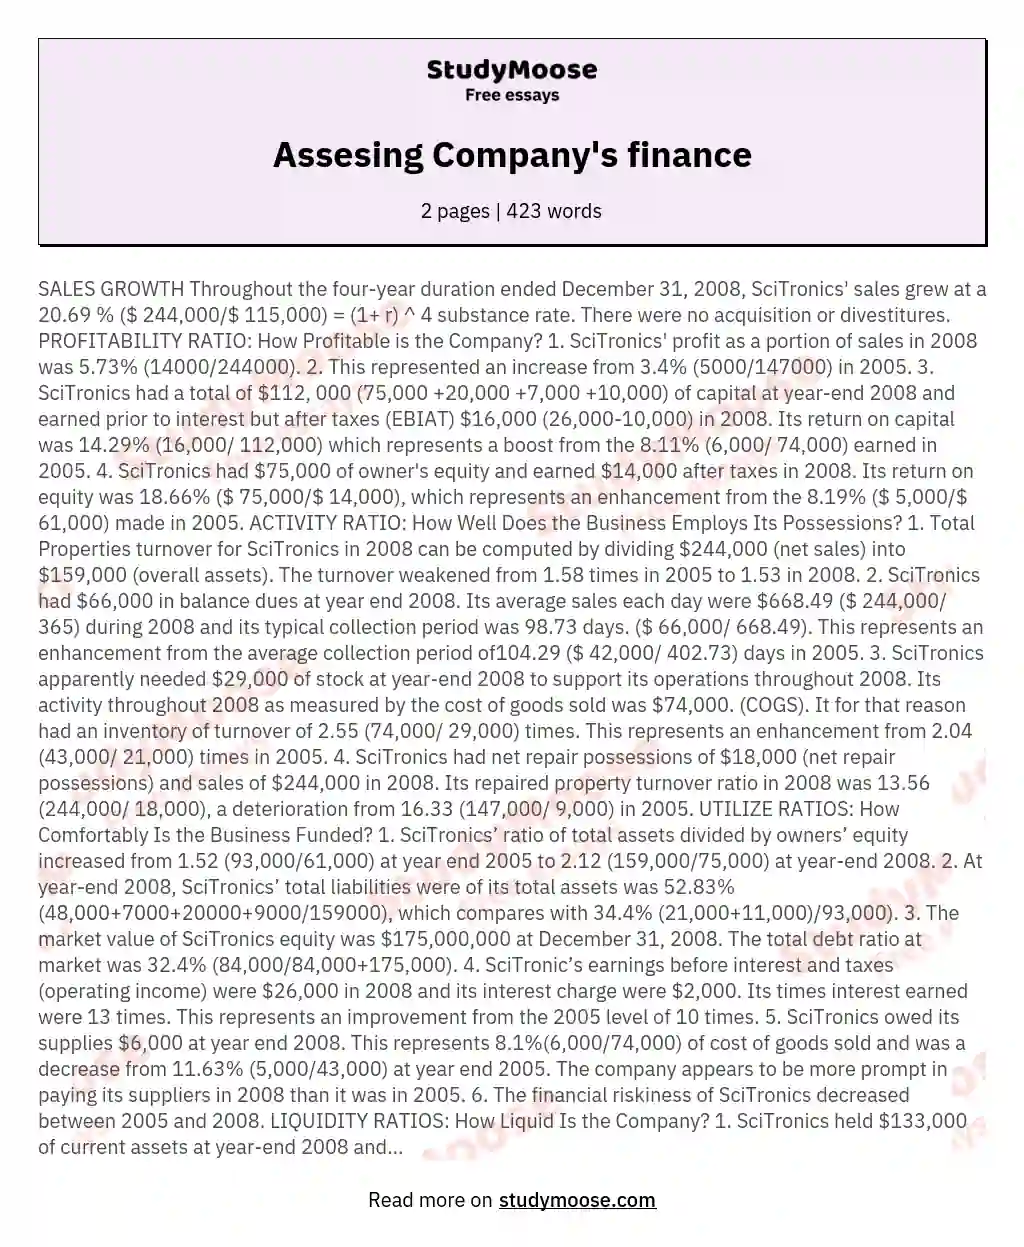 Assesing Company's finance essay